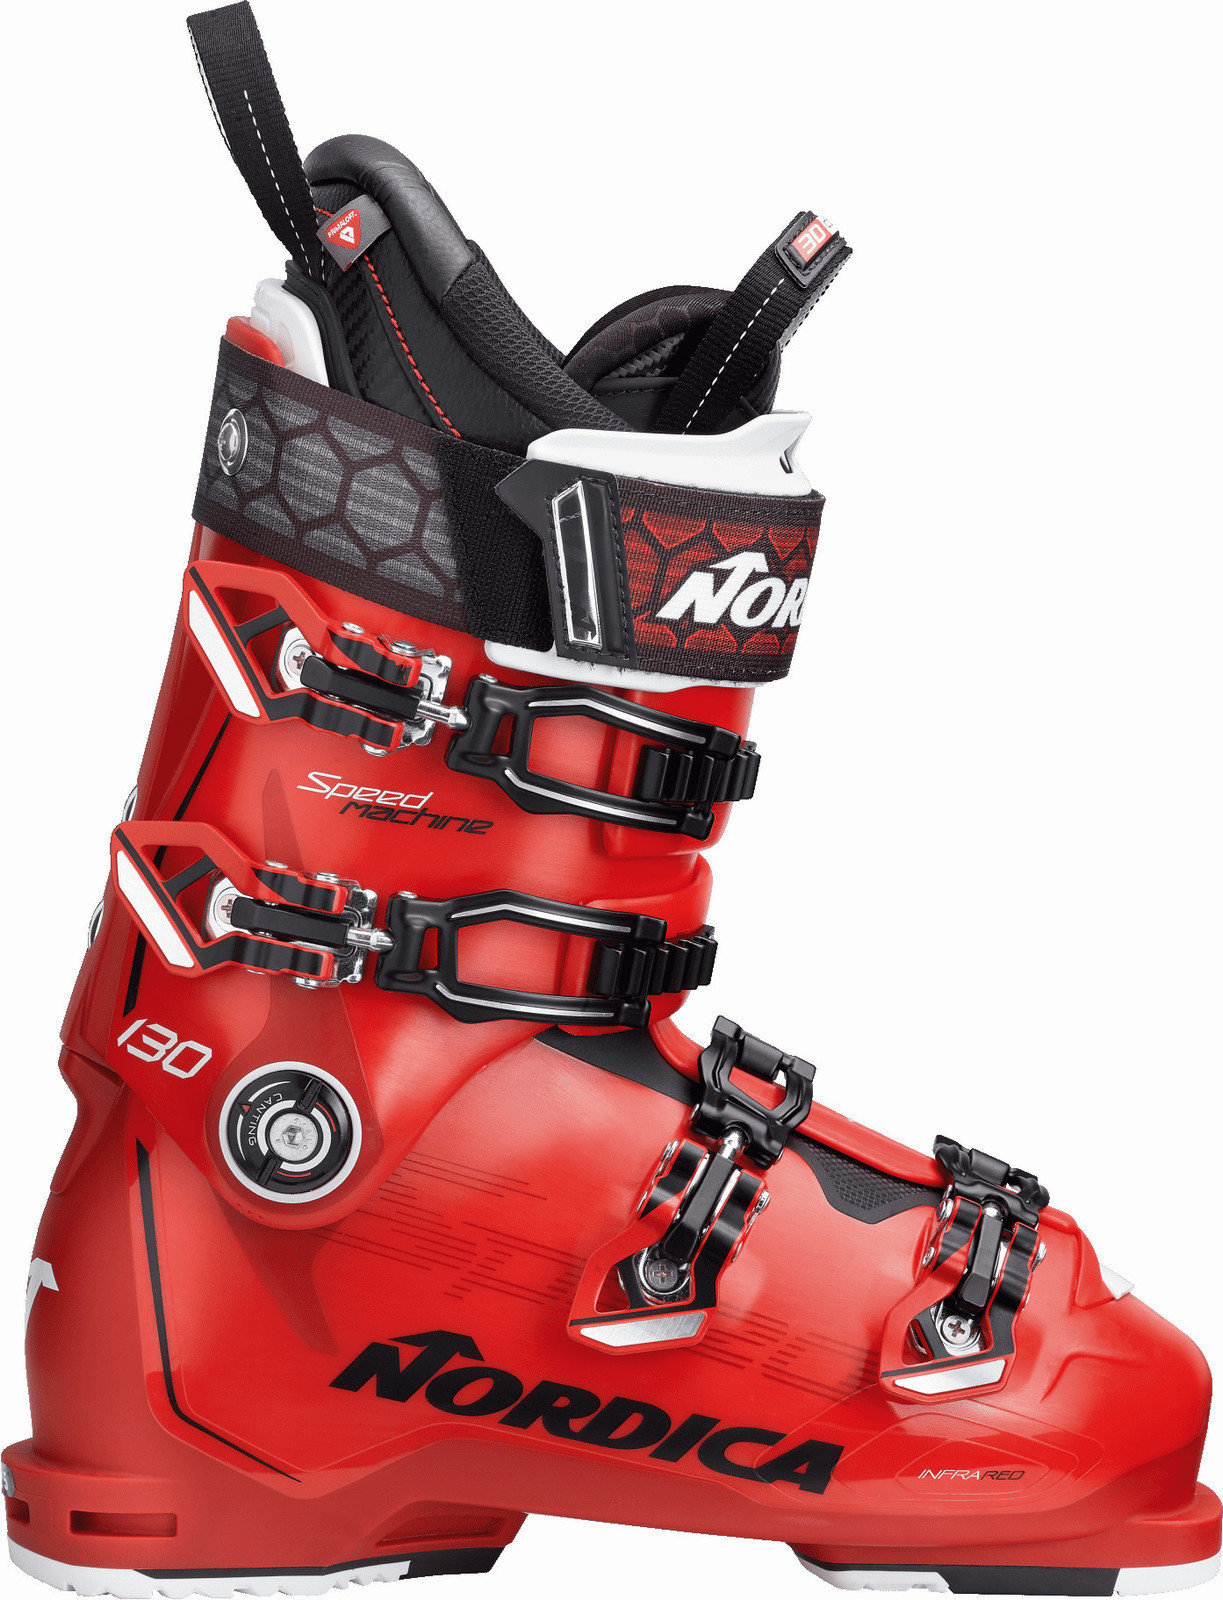 Chaussures de ski alpin Nordica Speedmachine 130 Red-Black-White 27.5 18/19